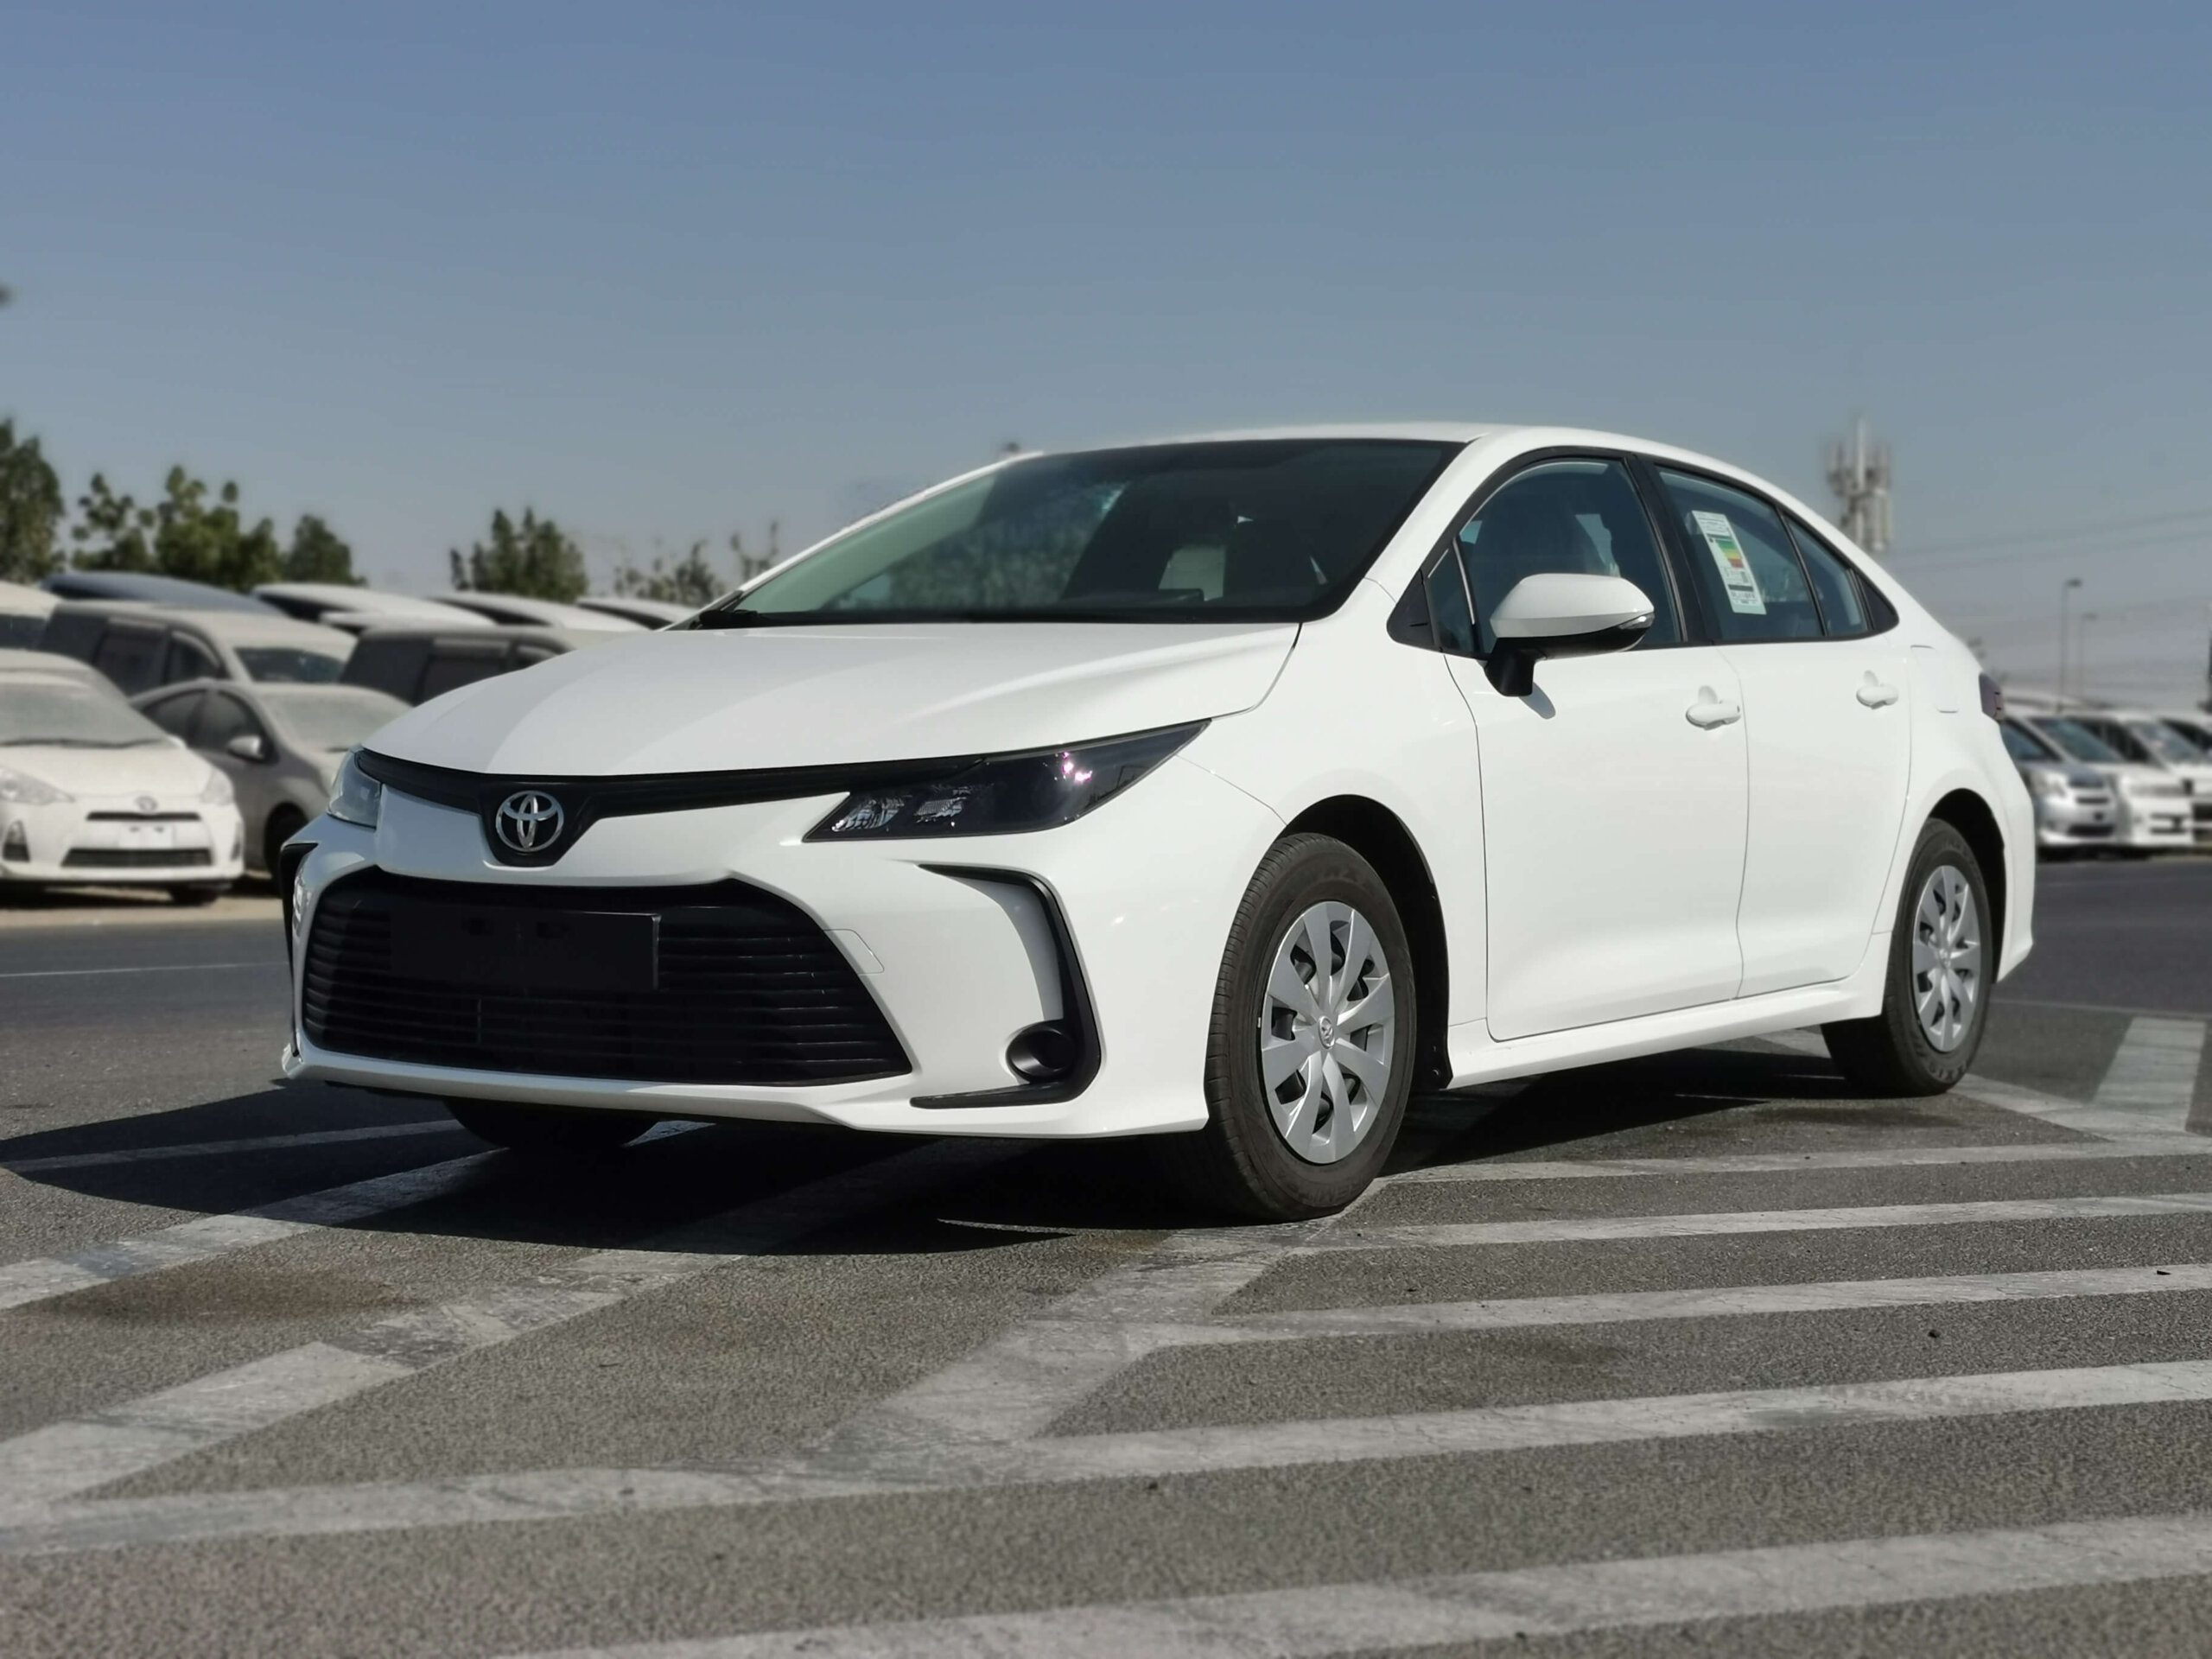 Toyota Corolla XLI 2020 1.6P White Full Front Left Profile